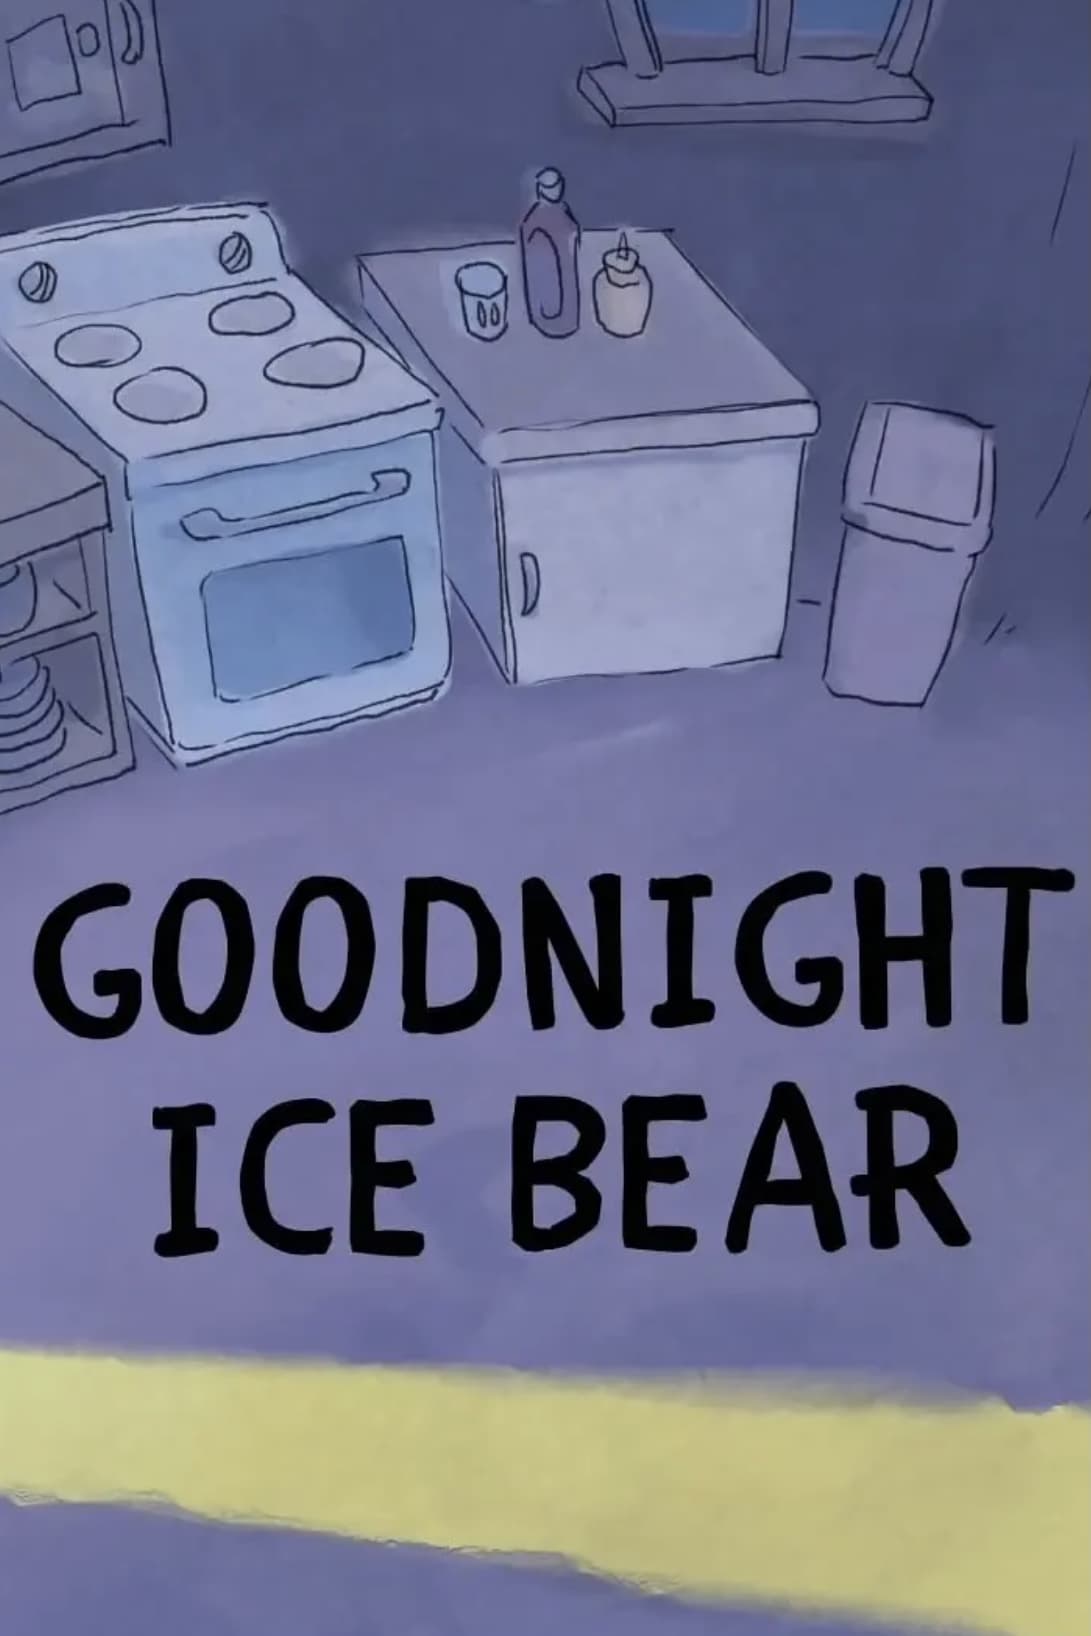 We Bare Bears: Goodnight Ice Bear